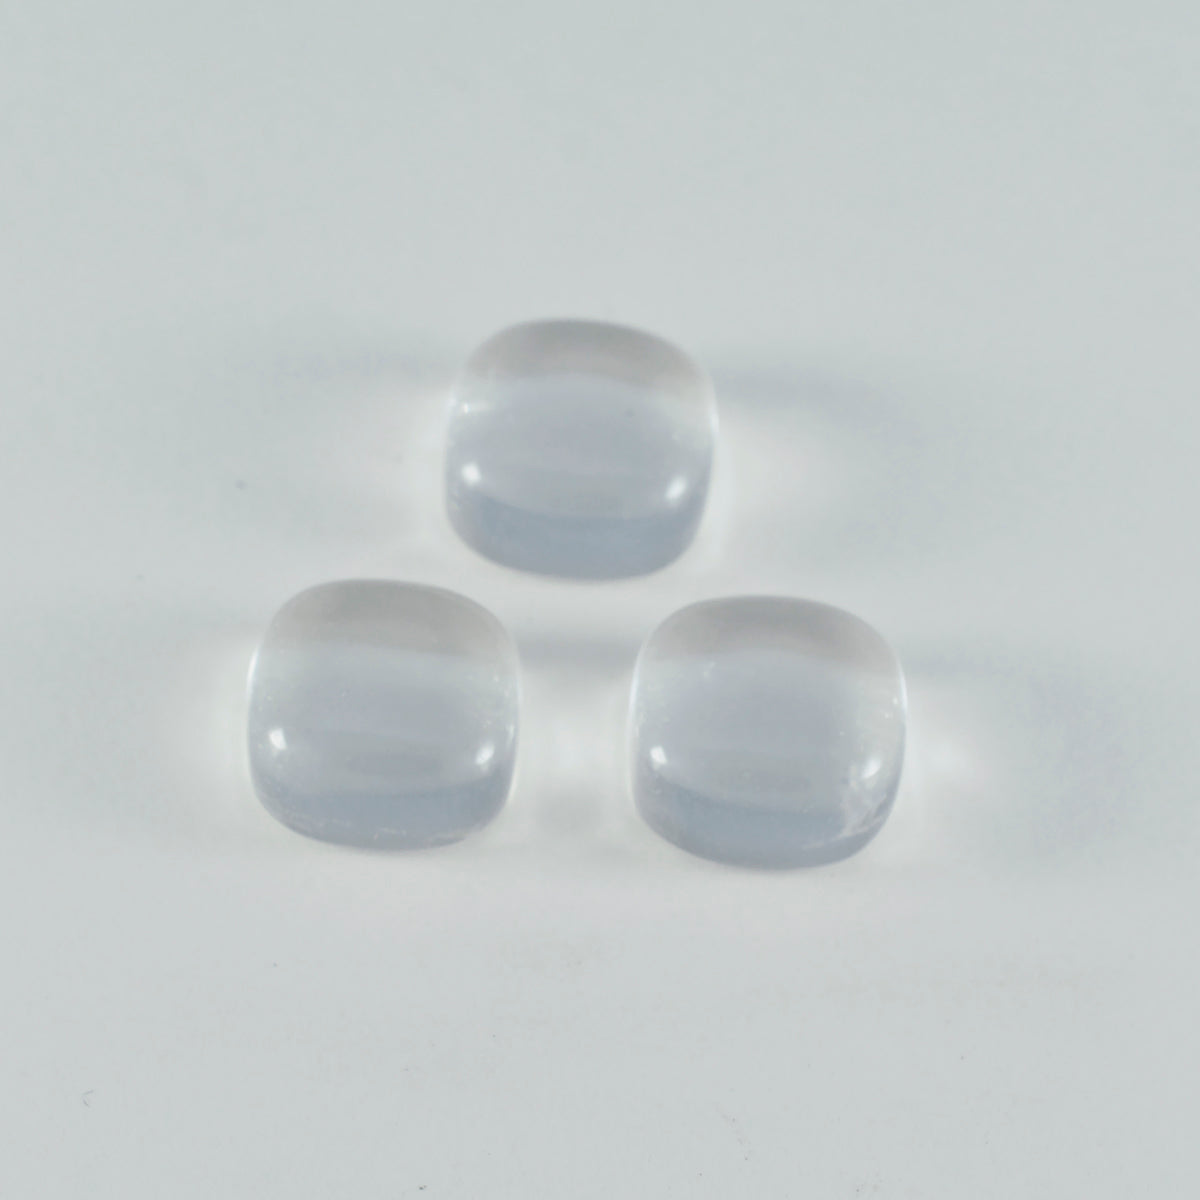 Riyogems 1PC White Crystal Quartz Cabochon 8x8 mm Cushion Shape handsome Quality Loose Gems